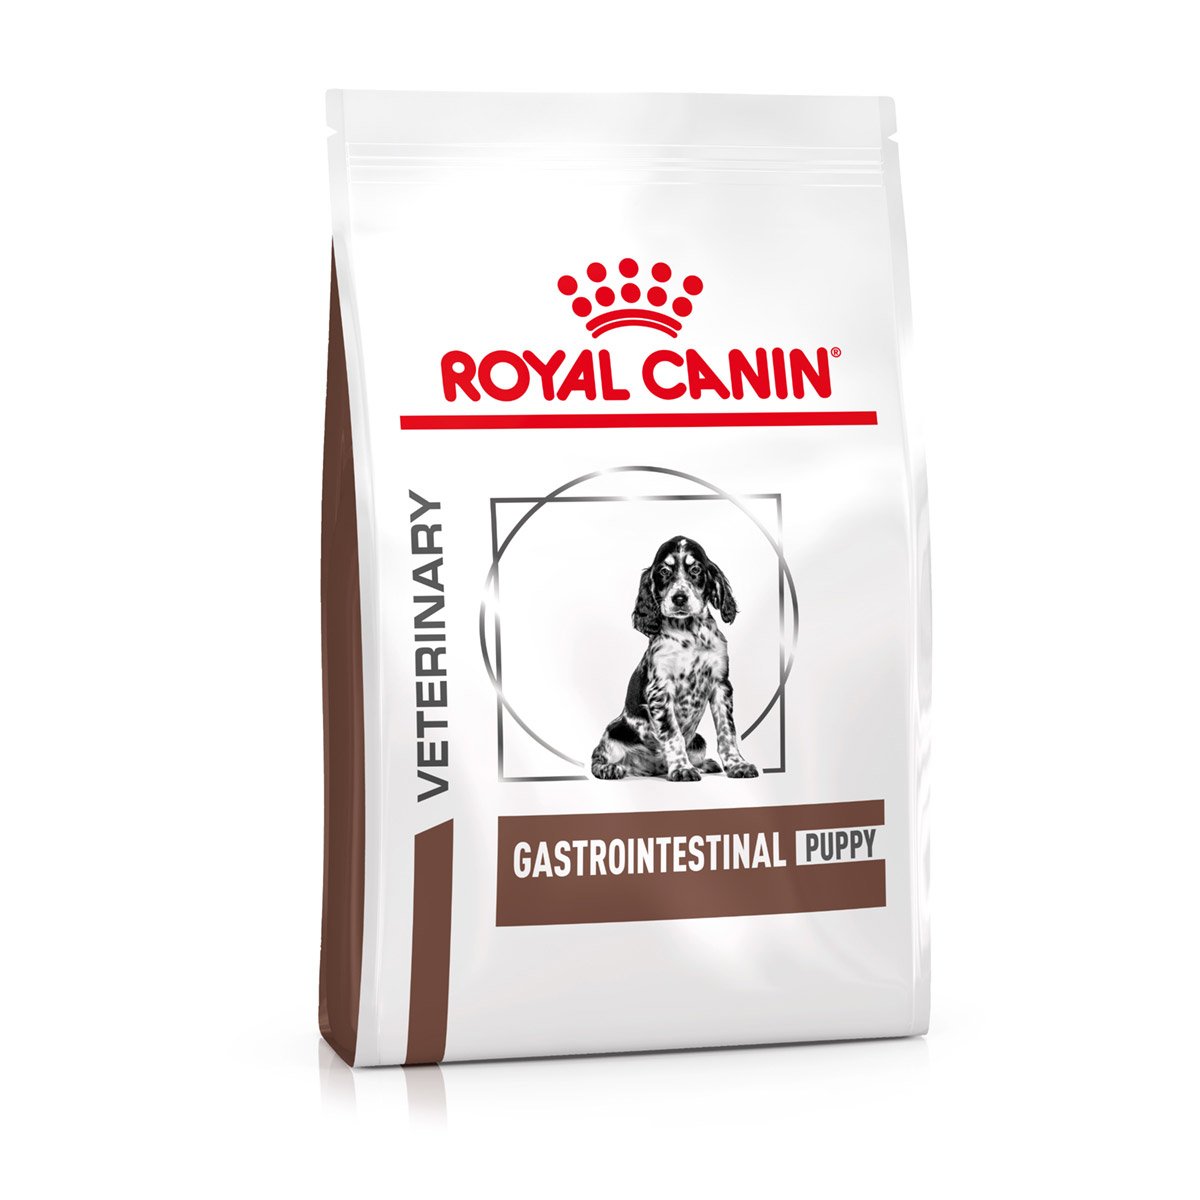 ROYAL CANIN® Veterinary GASTROINTESTINAL PUPPY Trockenfutter für Hundewelpen 10kg von Royal Canin